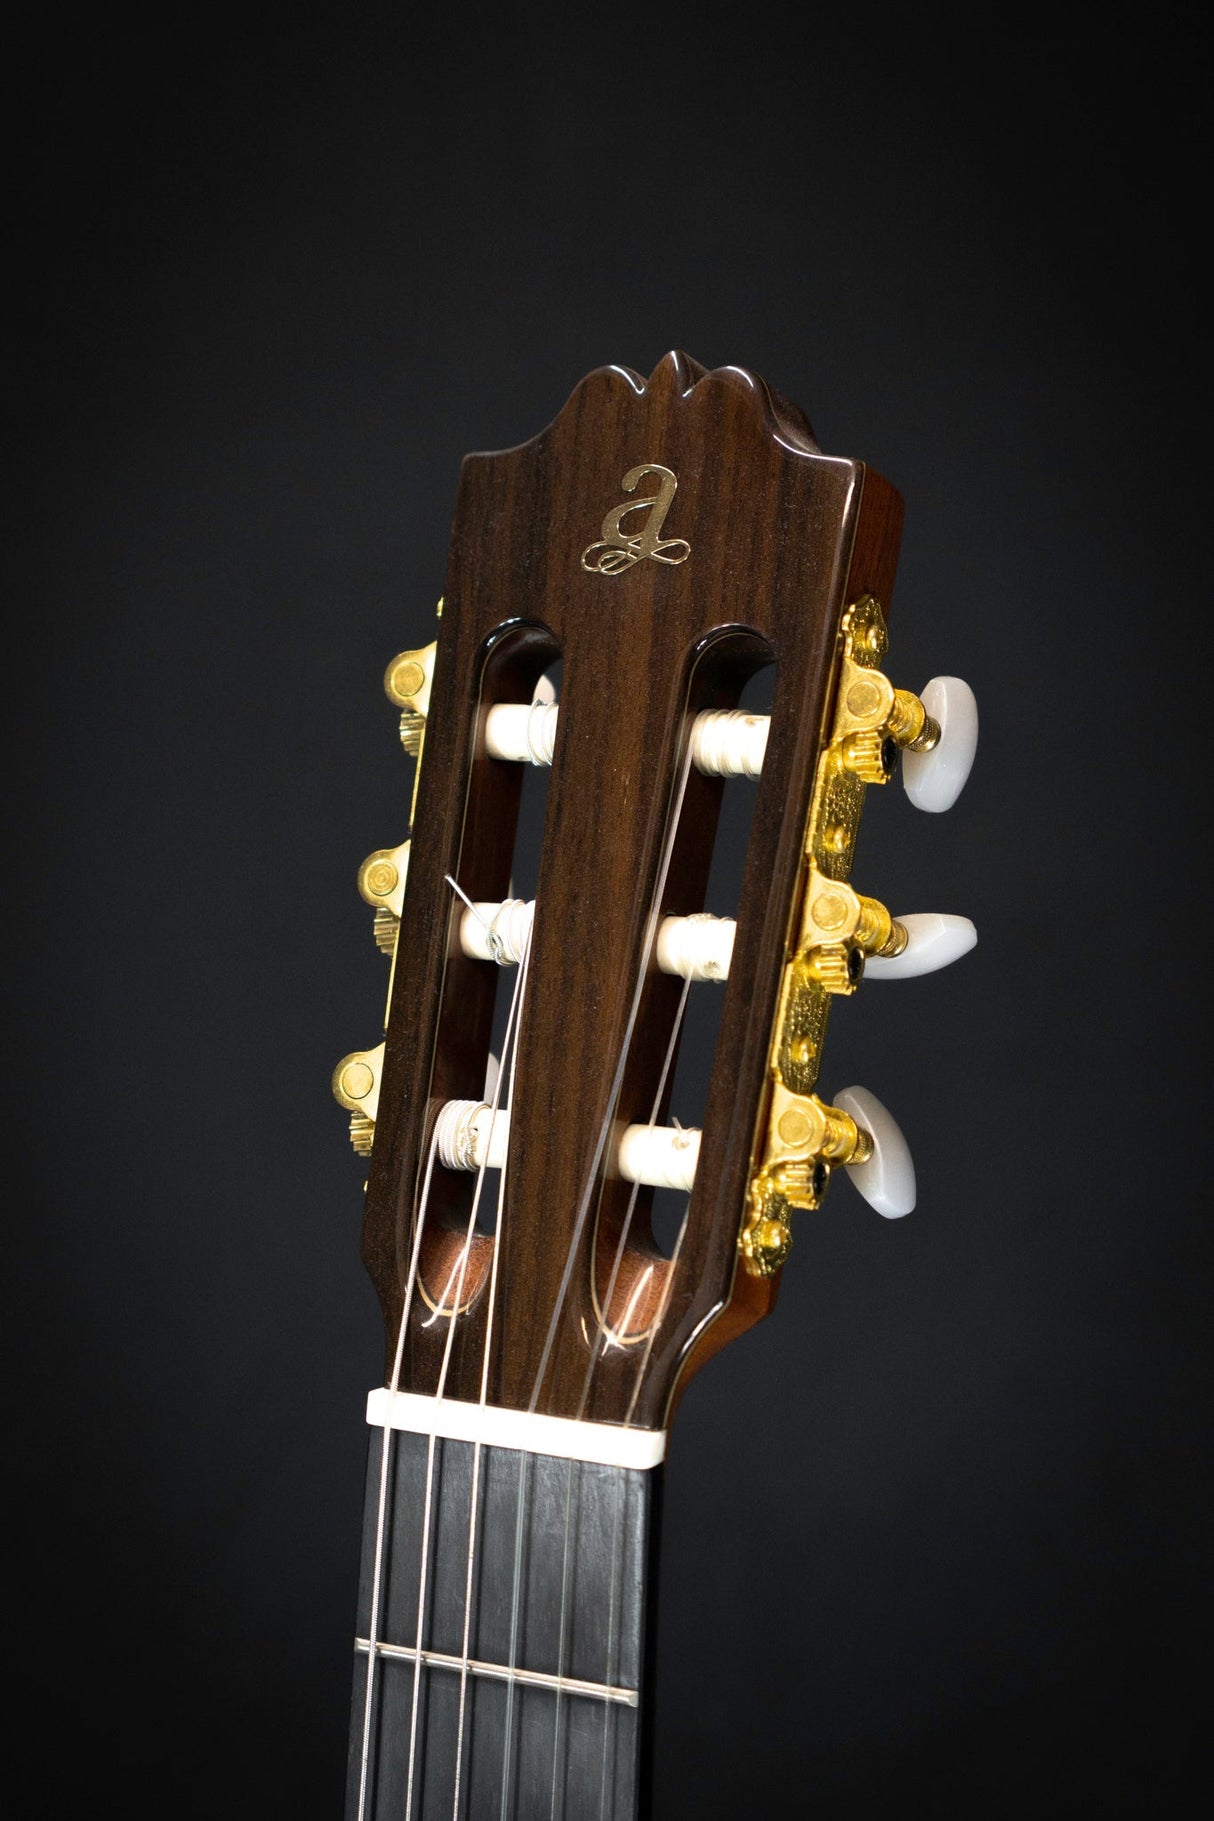 Admira A20 Handmade Classical Guitar - Classical Guitars - Admira